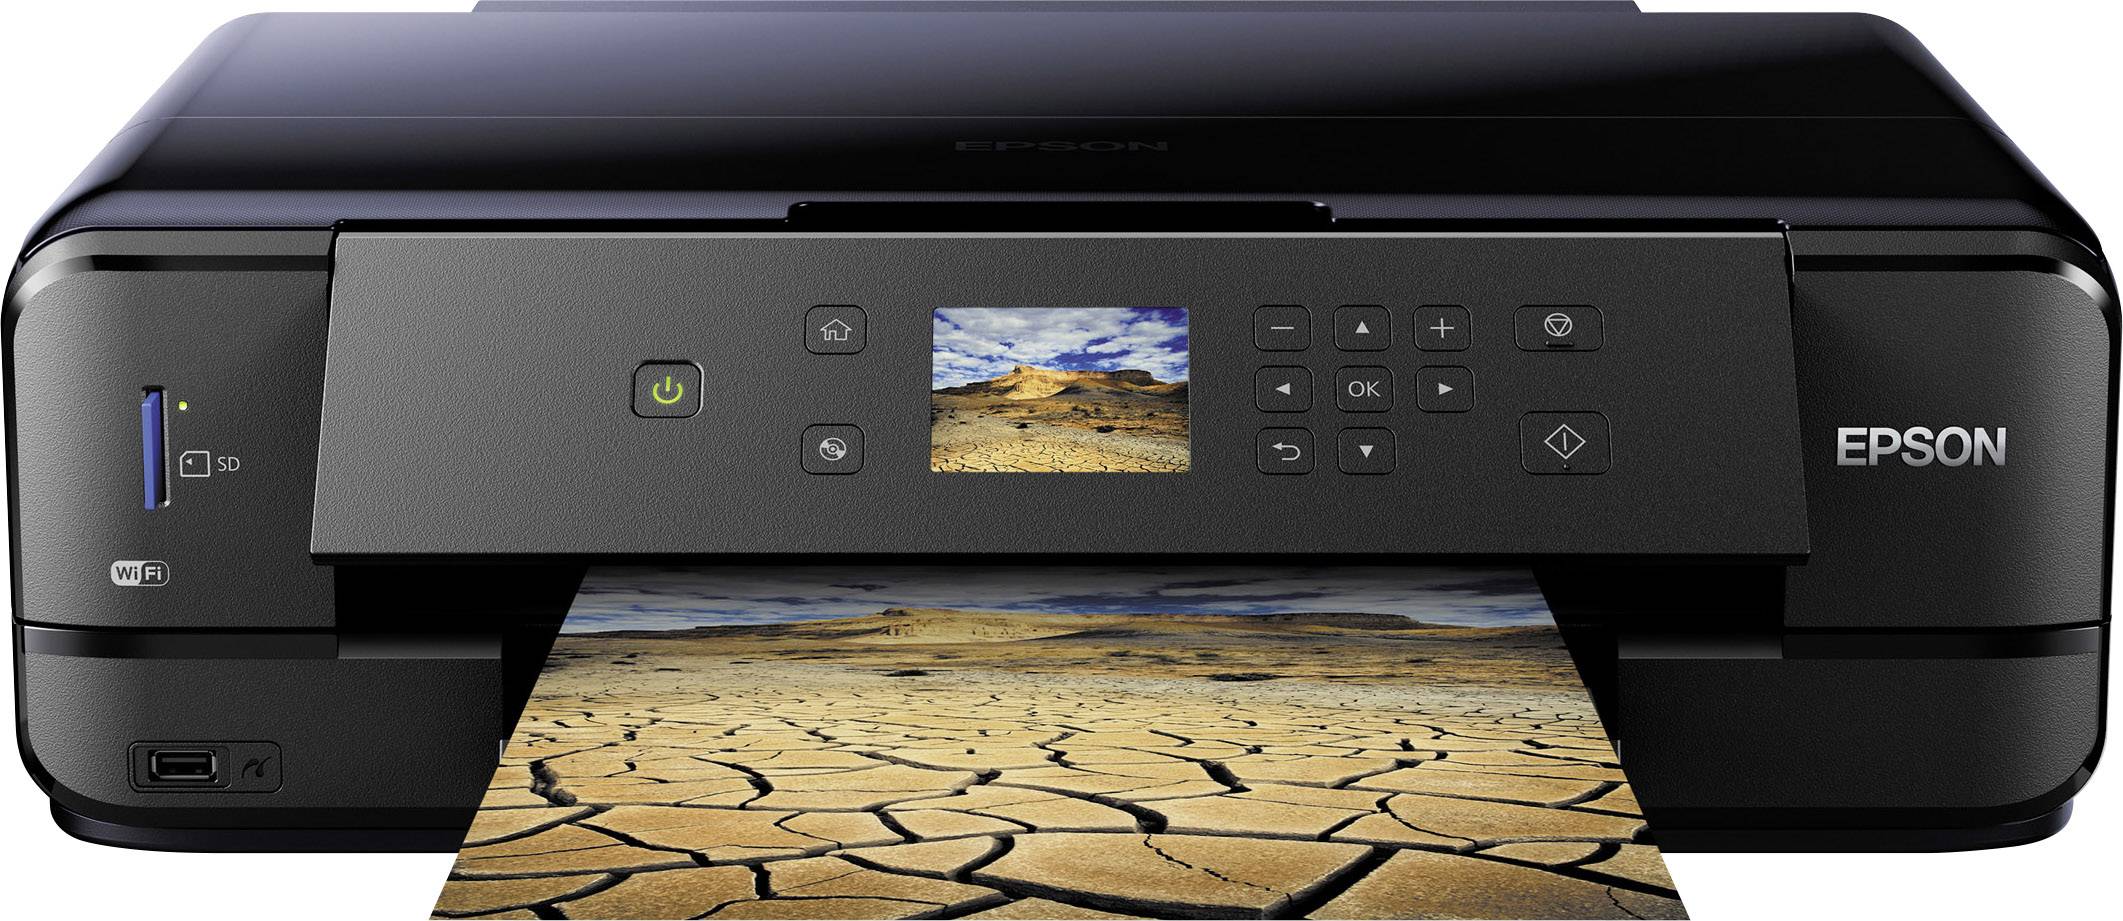 epson printer scan to computer wireless